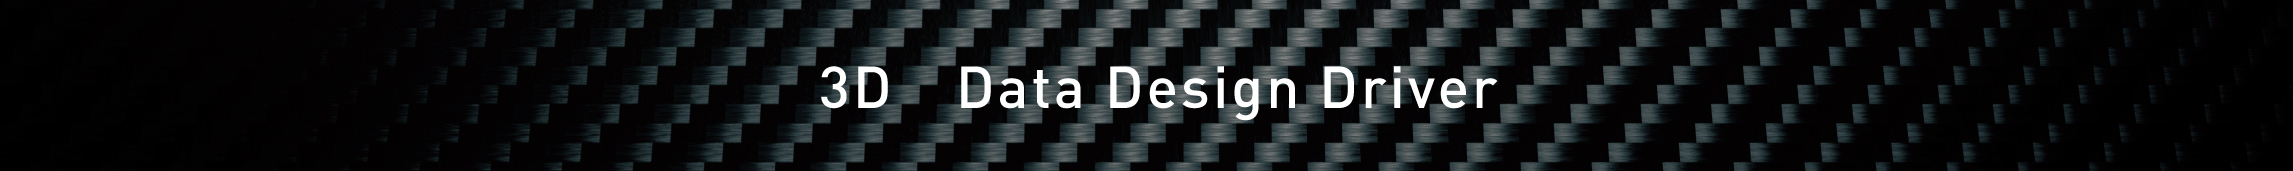 3D Data Design Driver